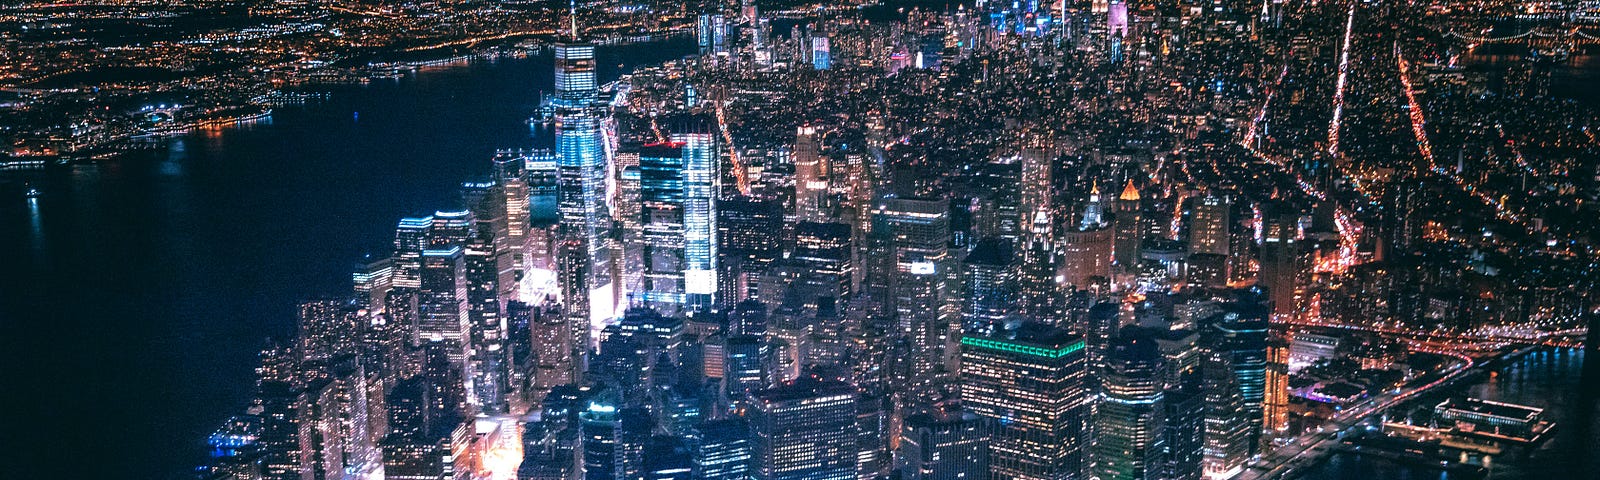 Aerial view of Manhattan skyline at night